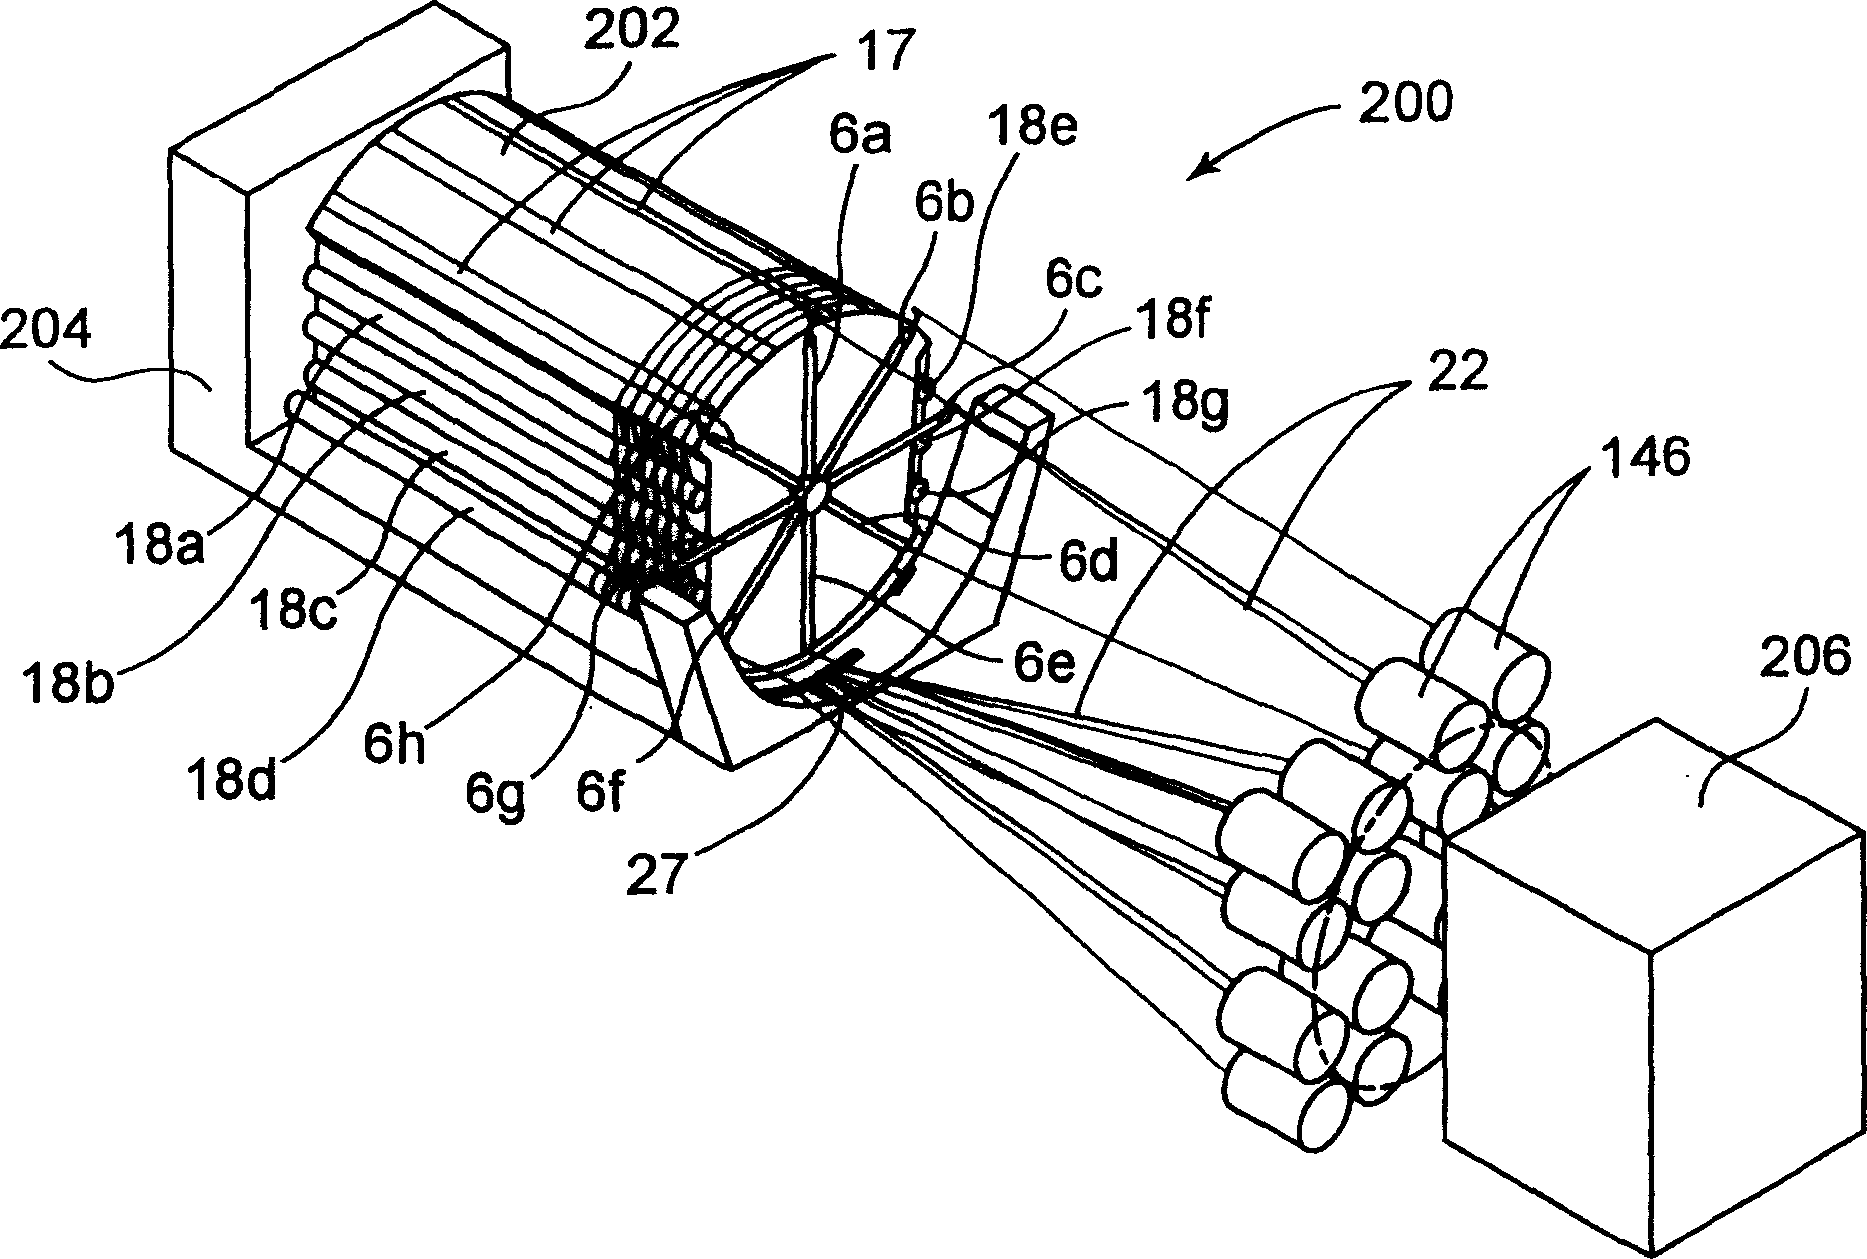 Multi-shaft rotary creel, sample warper and warping method